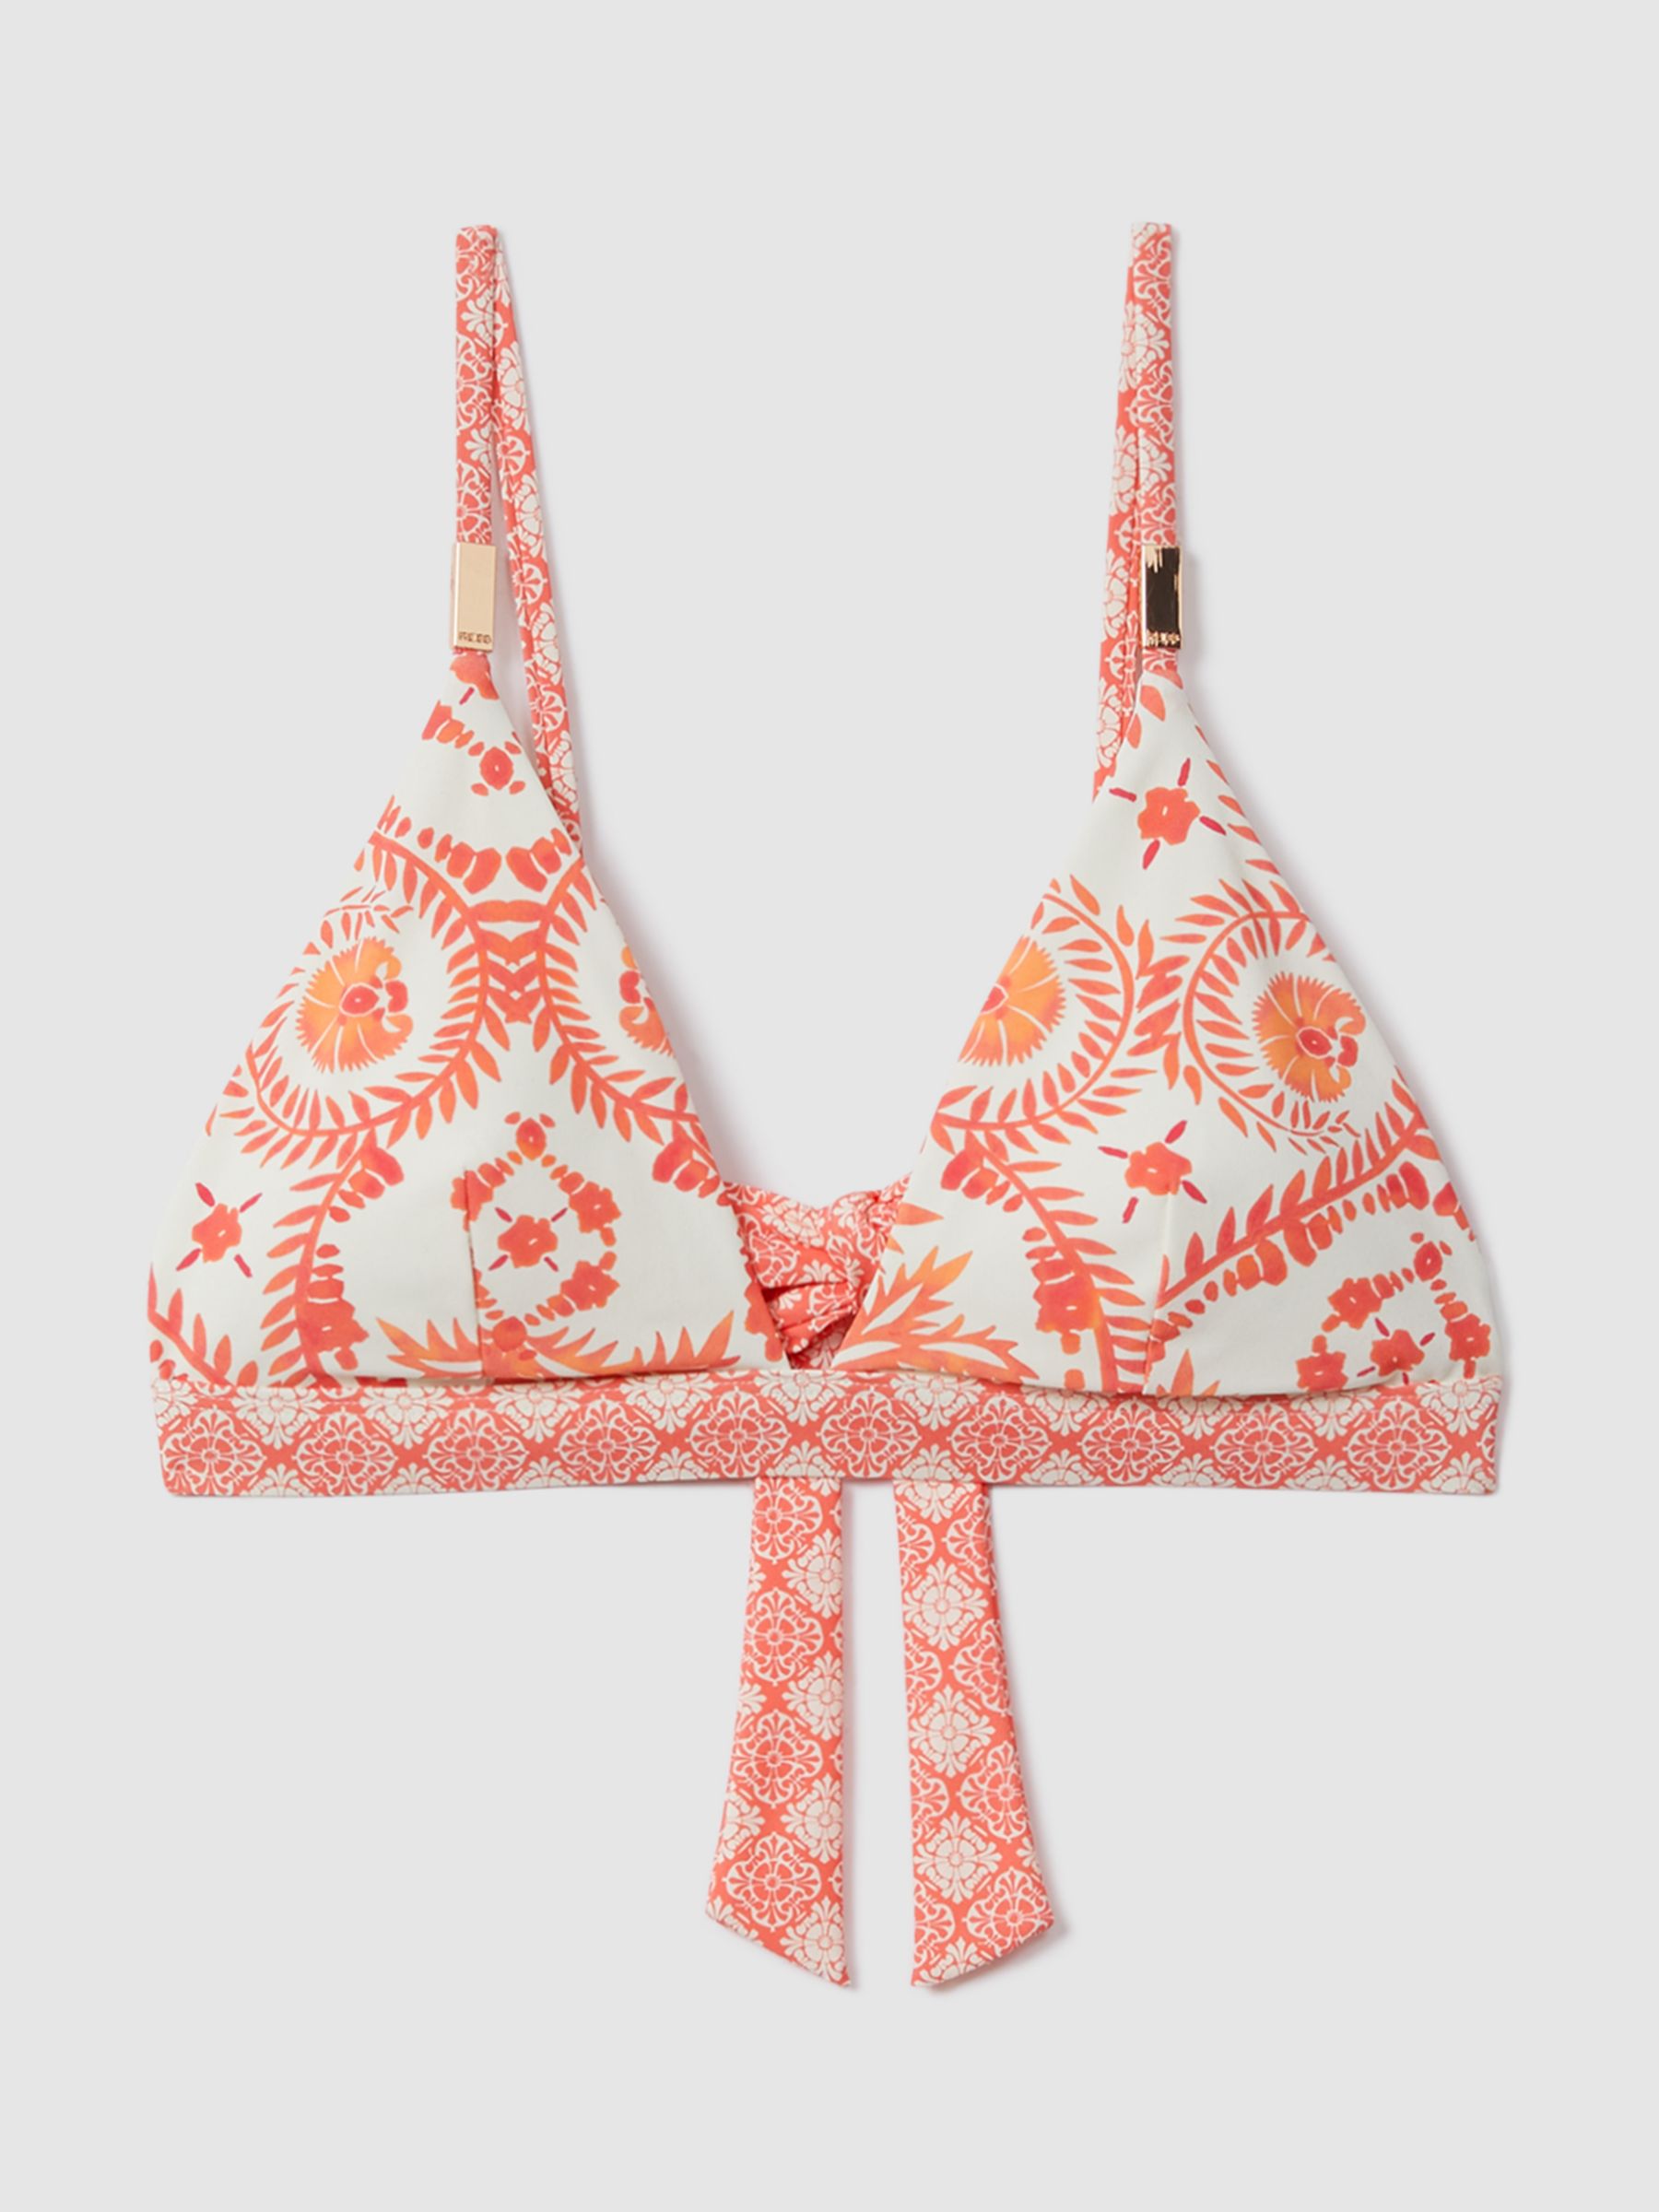 Reiss Kallie Fern Print Triangle Bikini Top, Cream/Coral, 6